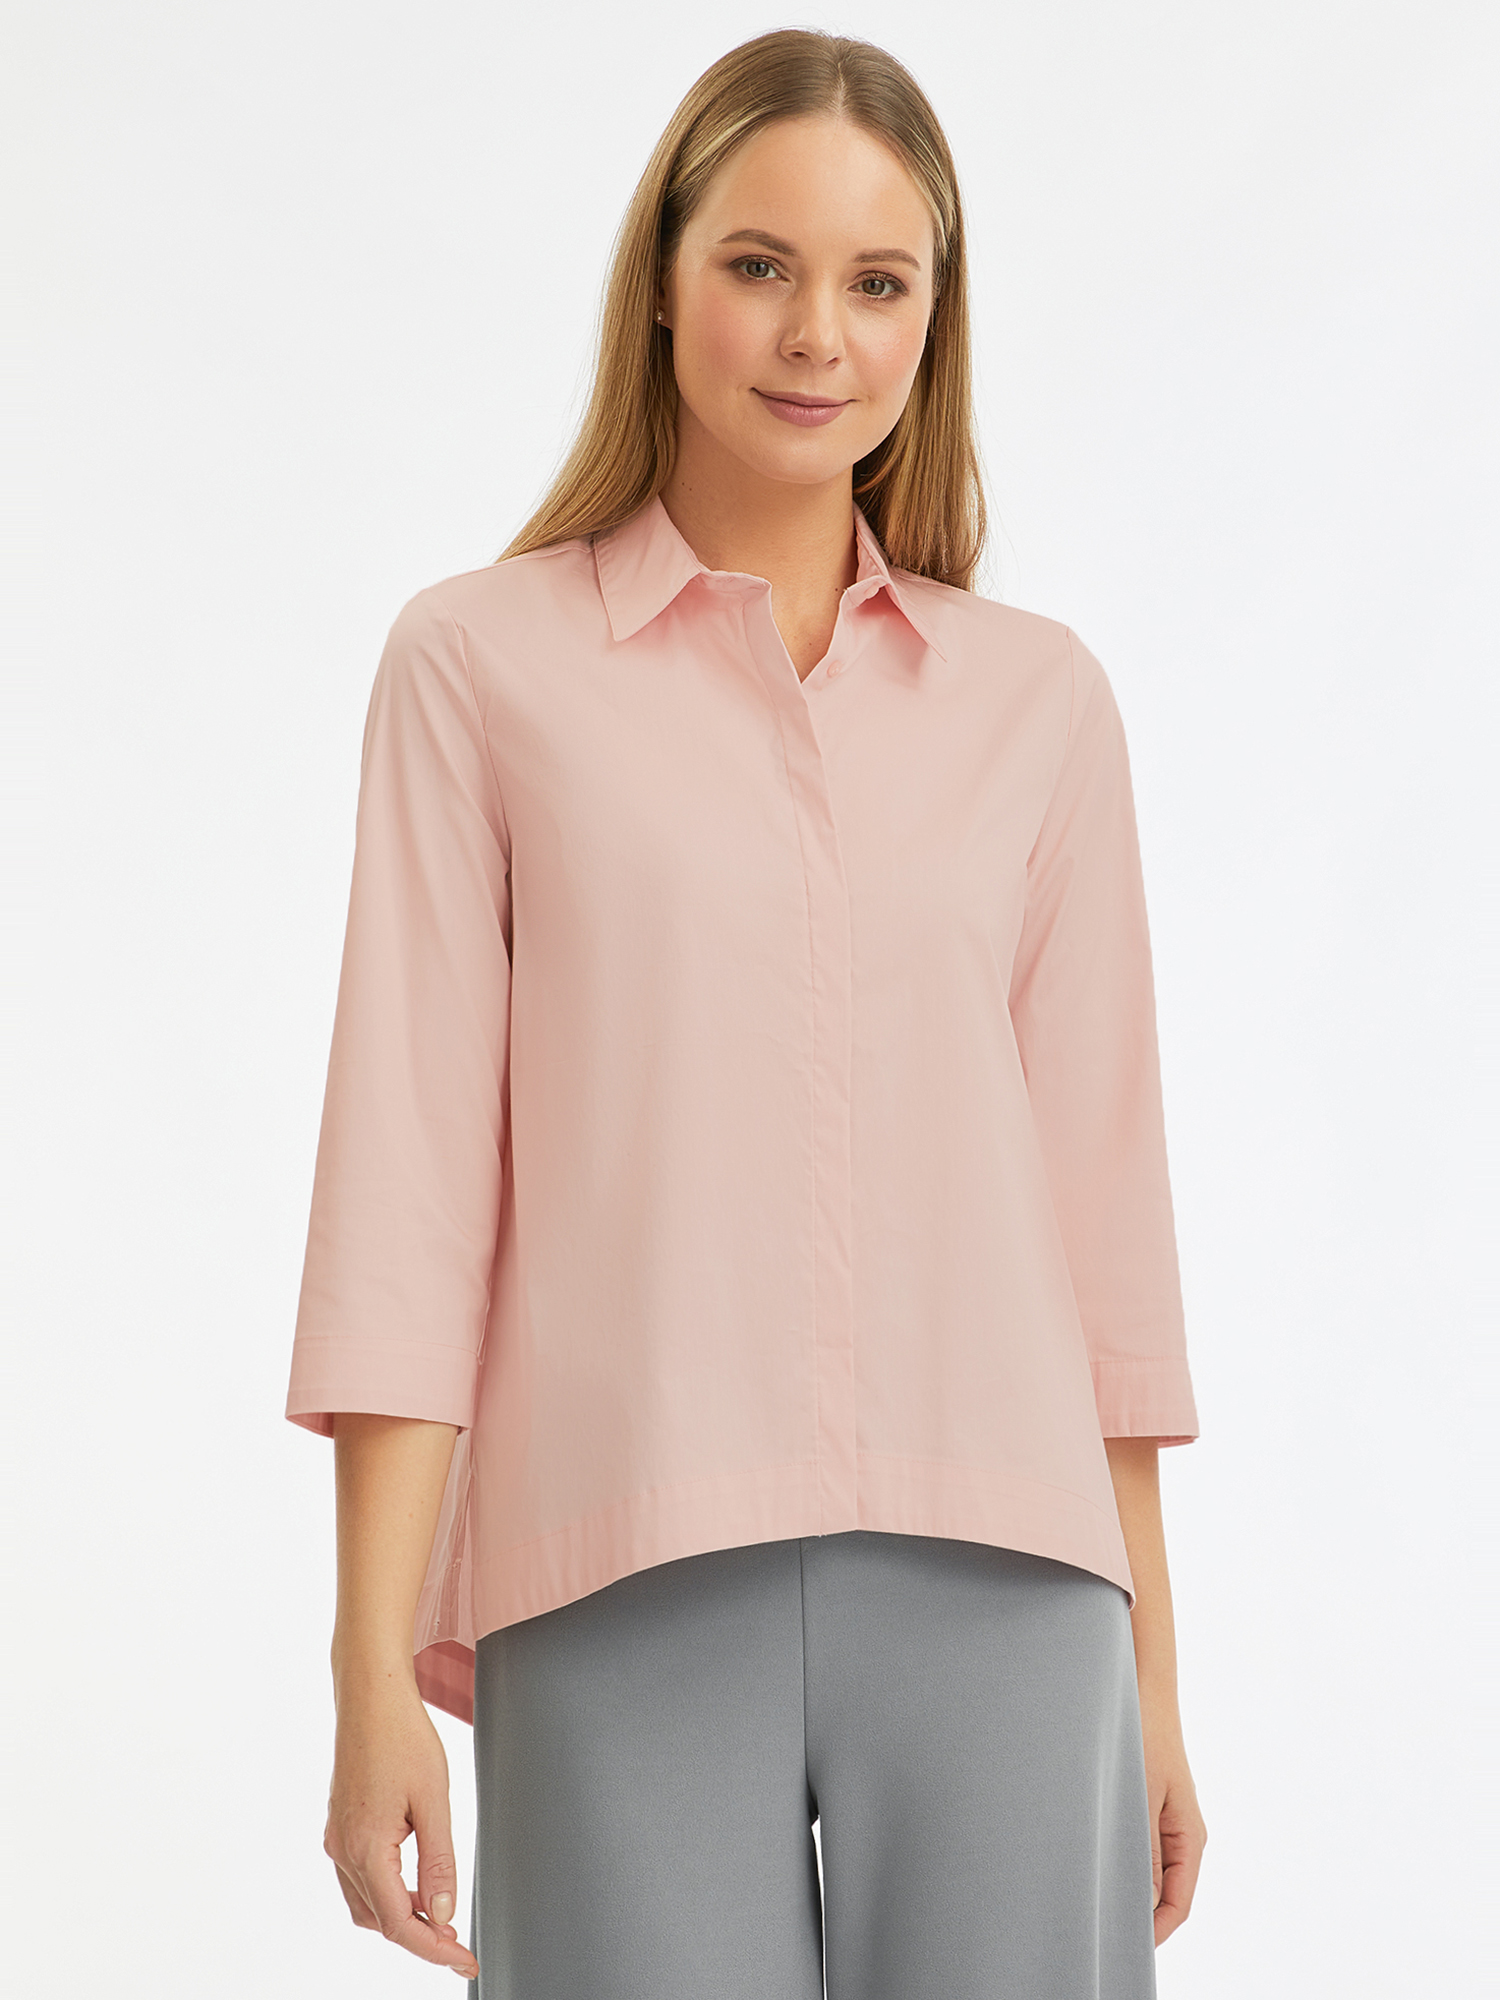 Рубашка женская oodji 13K11002-1B розовая 42